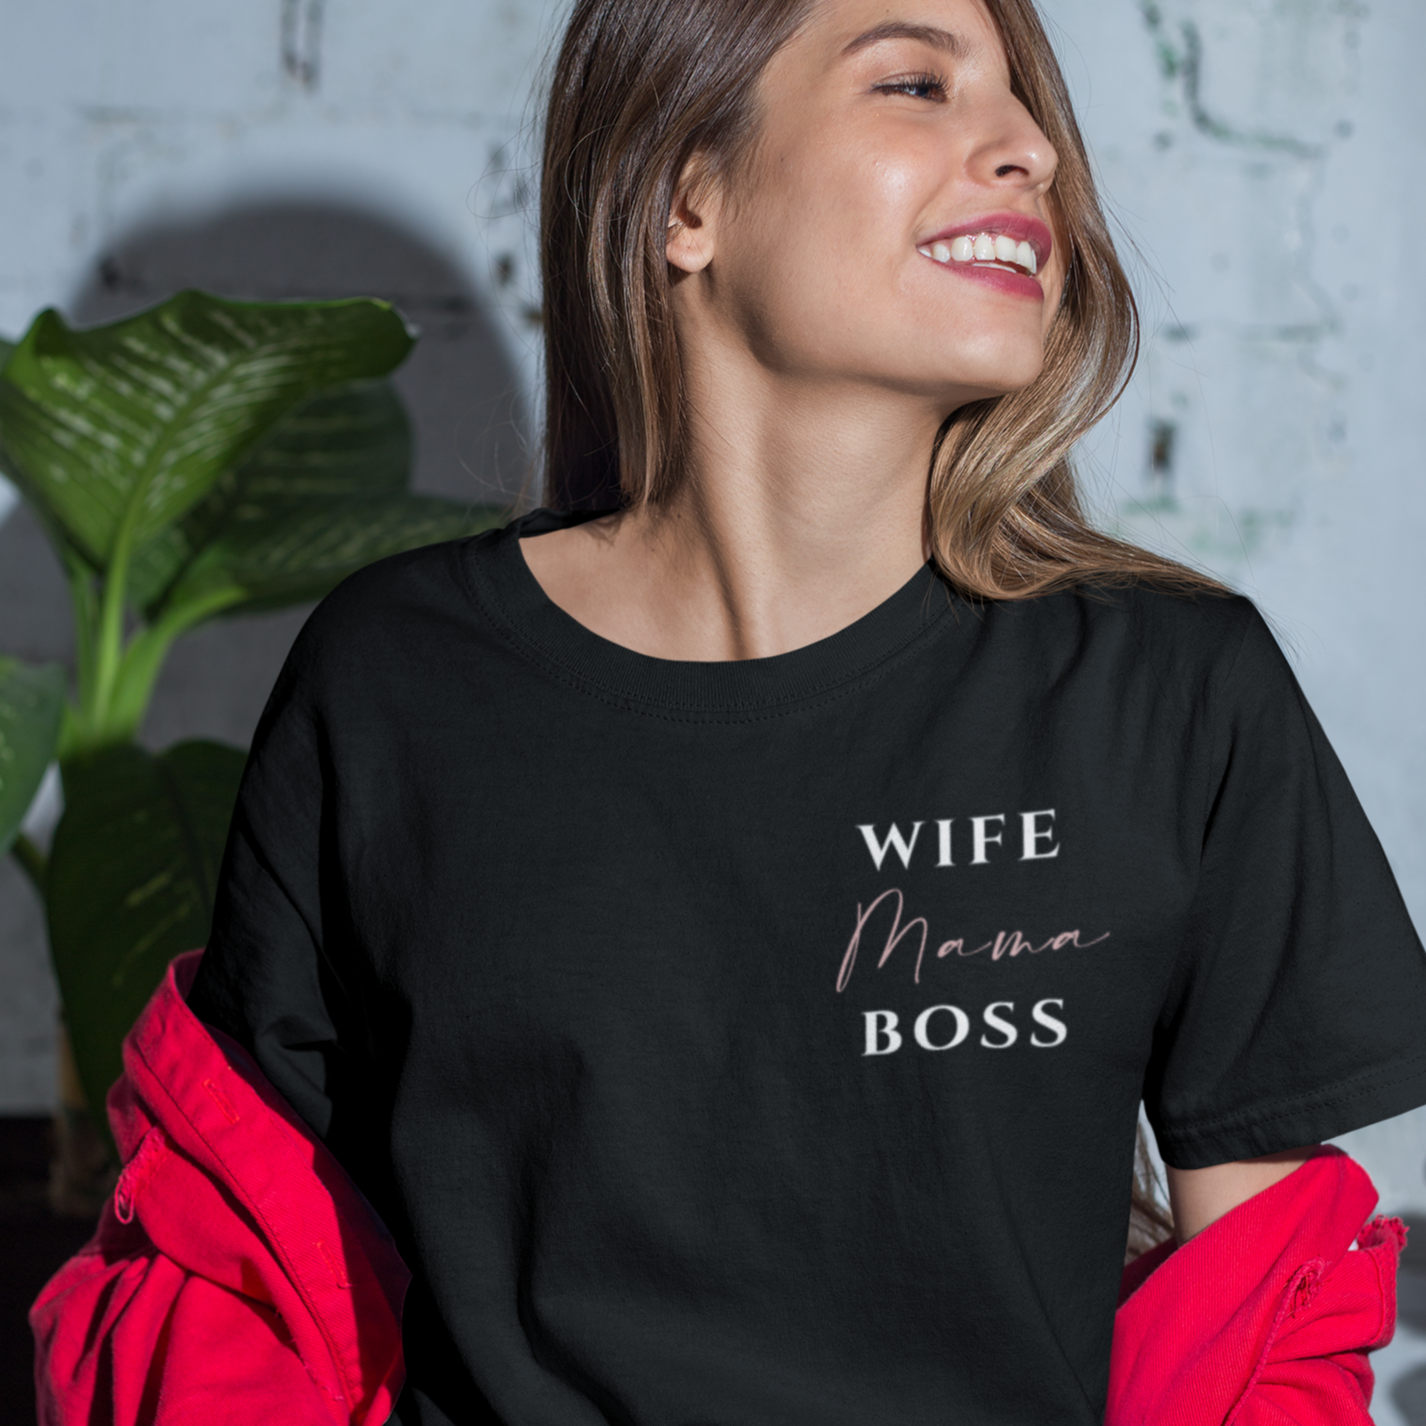 Wife, Mama, Boss - T-Shirt schwarz